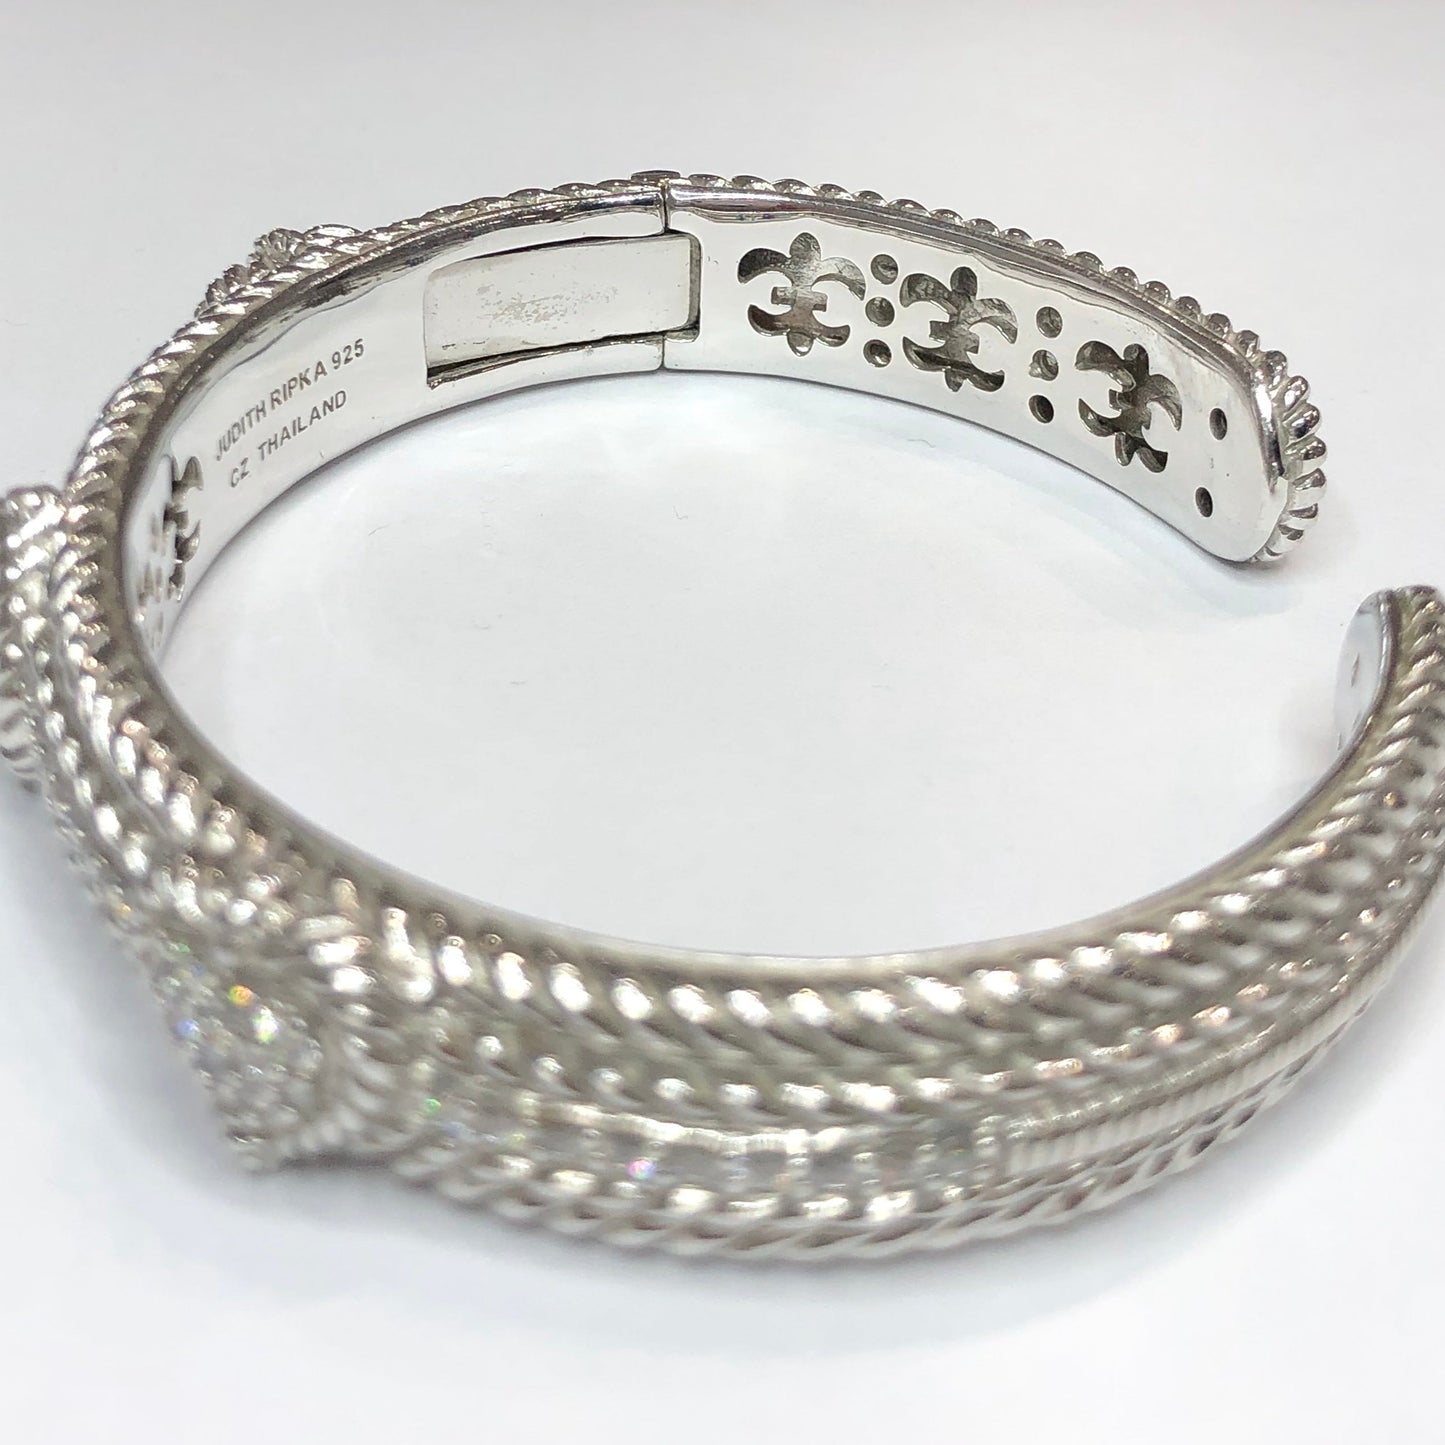 Judith Ripka 925 Open Cuff Bracelet W/CZ